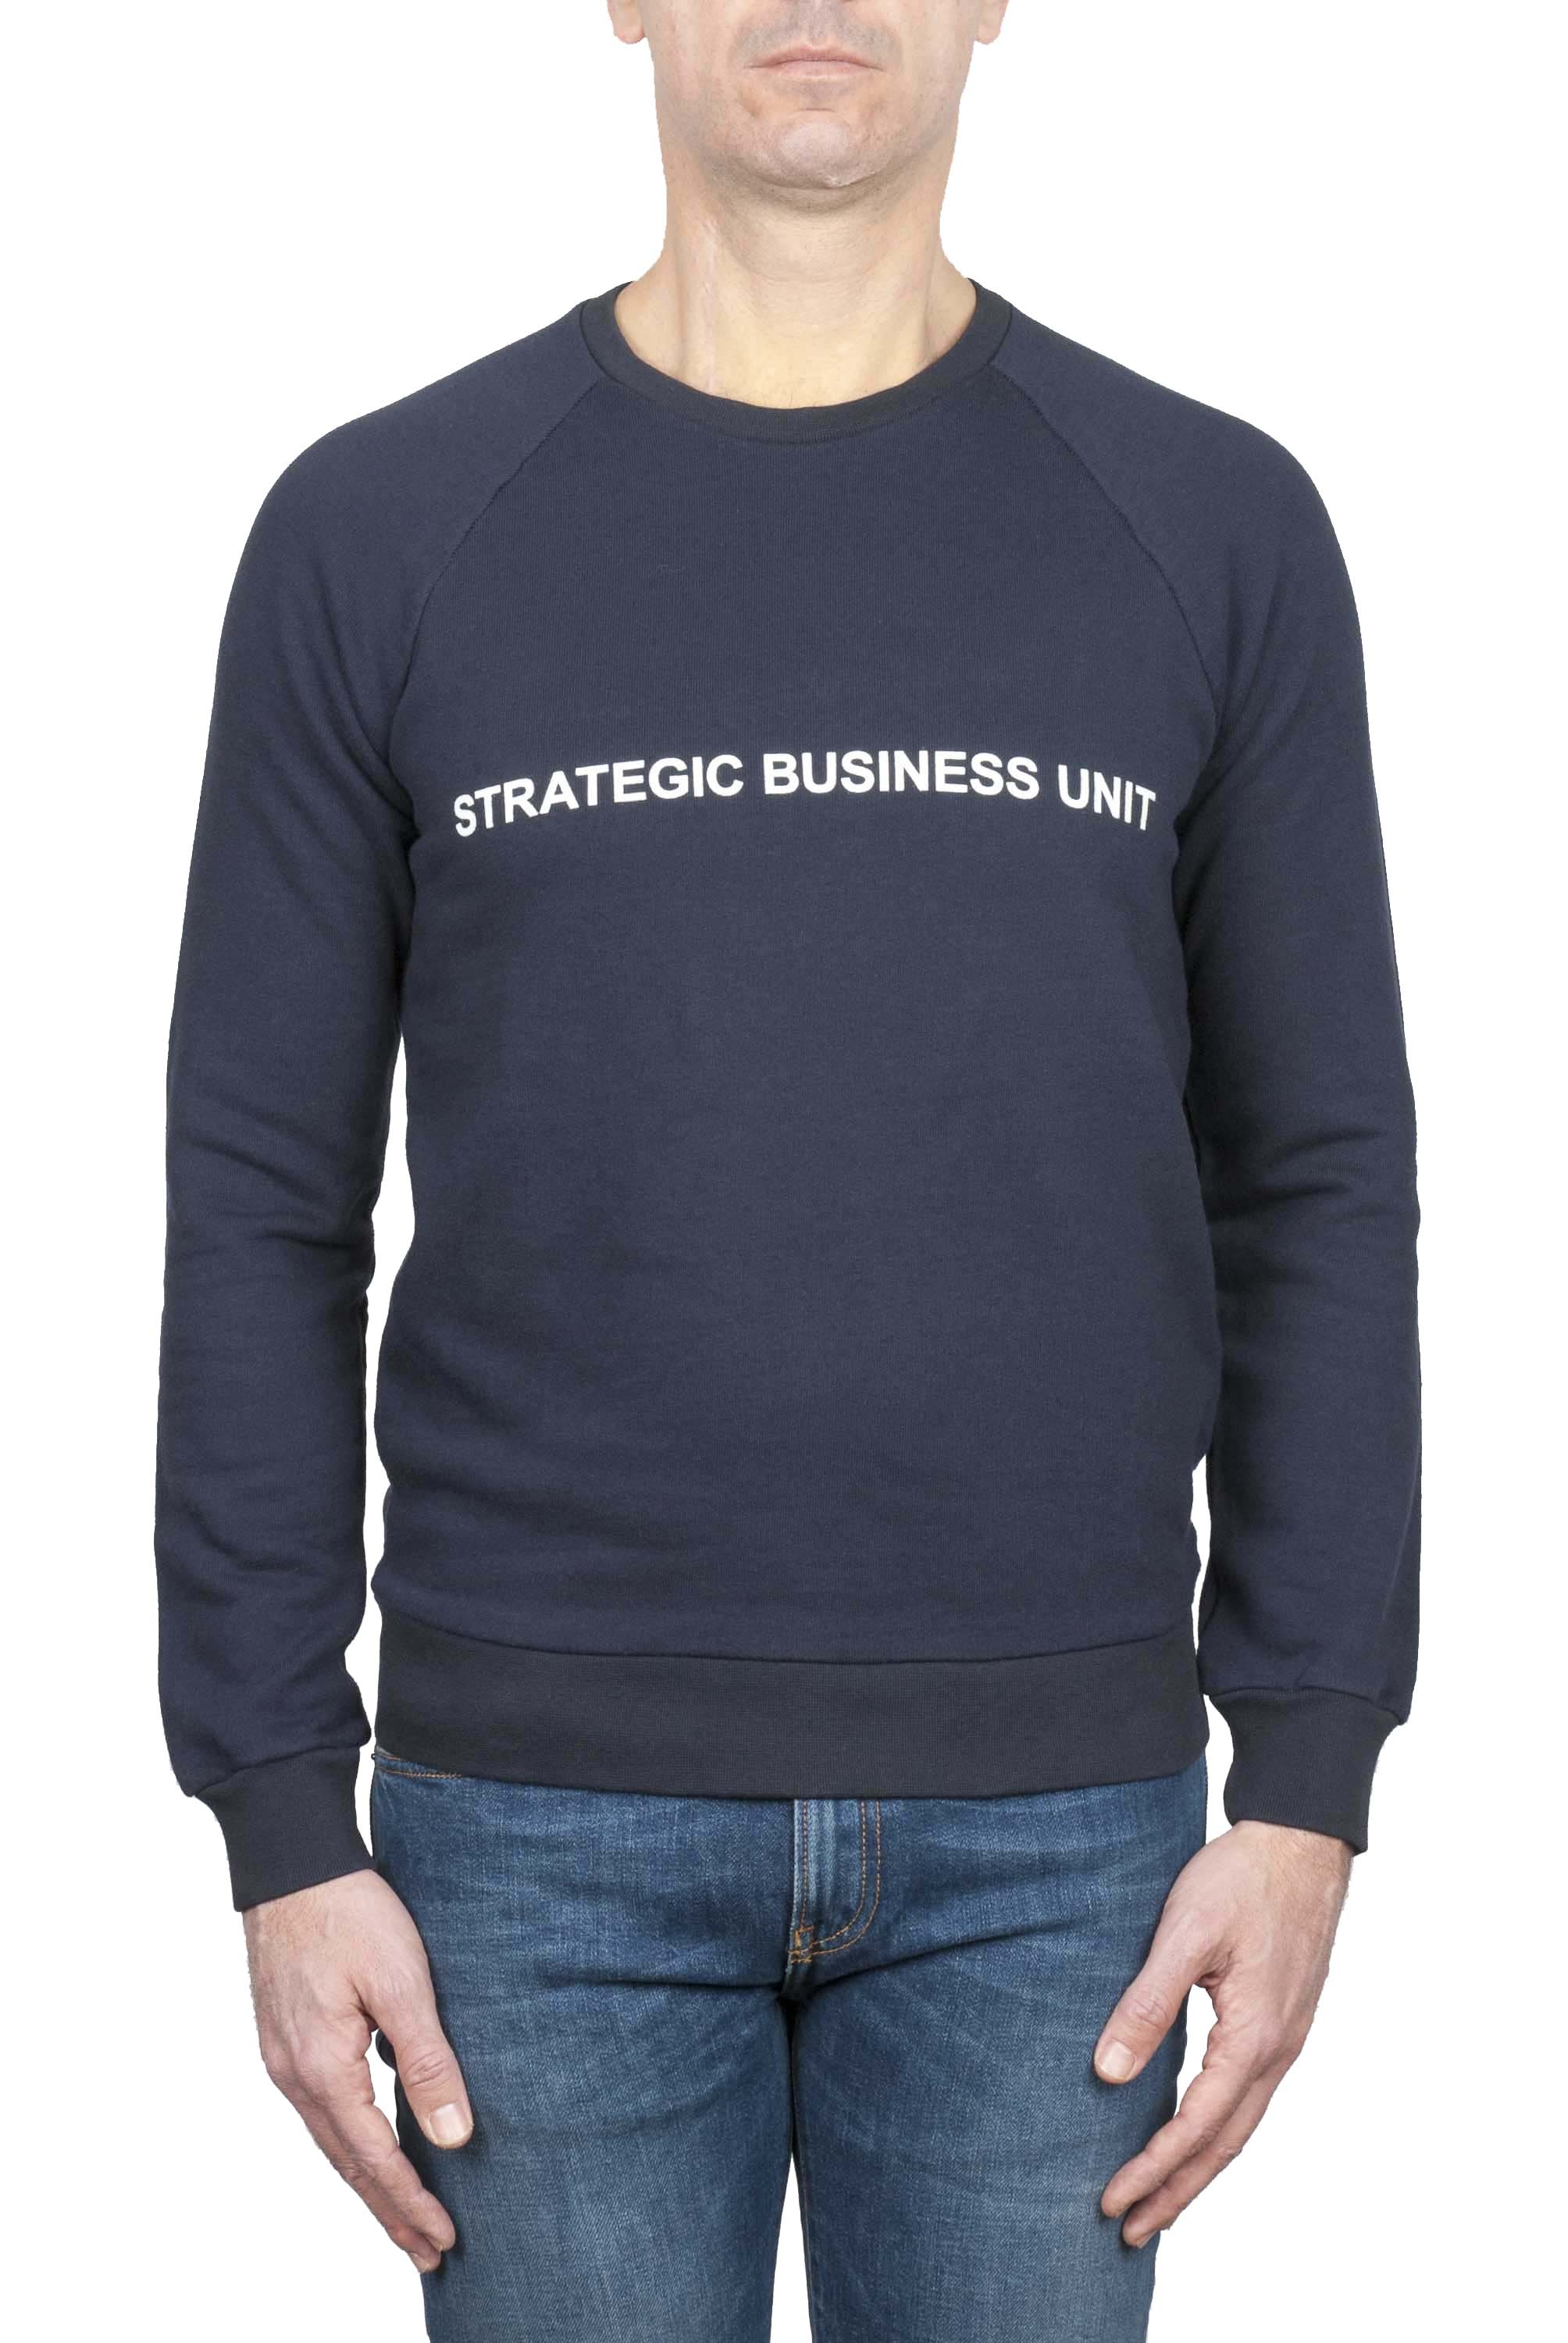 SBU 01466_19AW Strategic Business Unitロゴプリントクルーネックスウェットシャツ 01